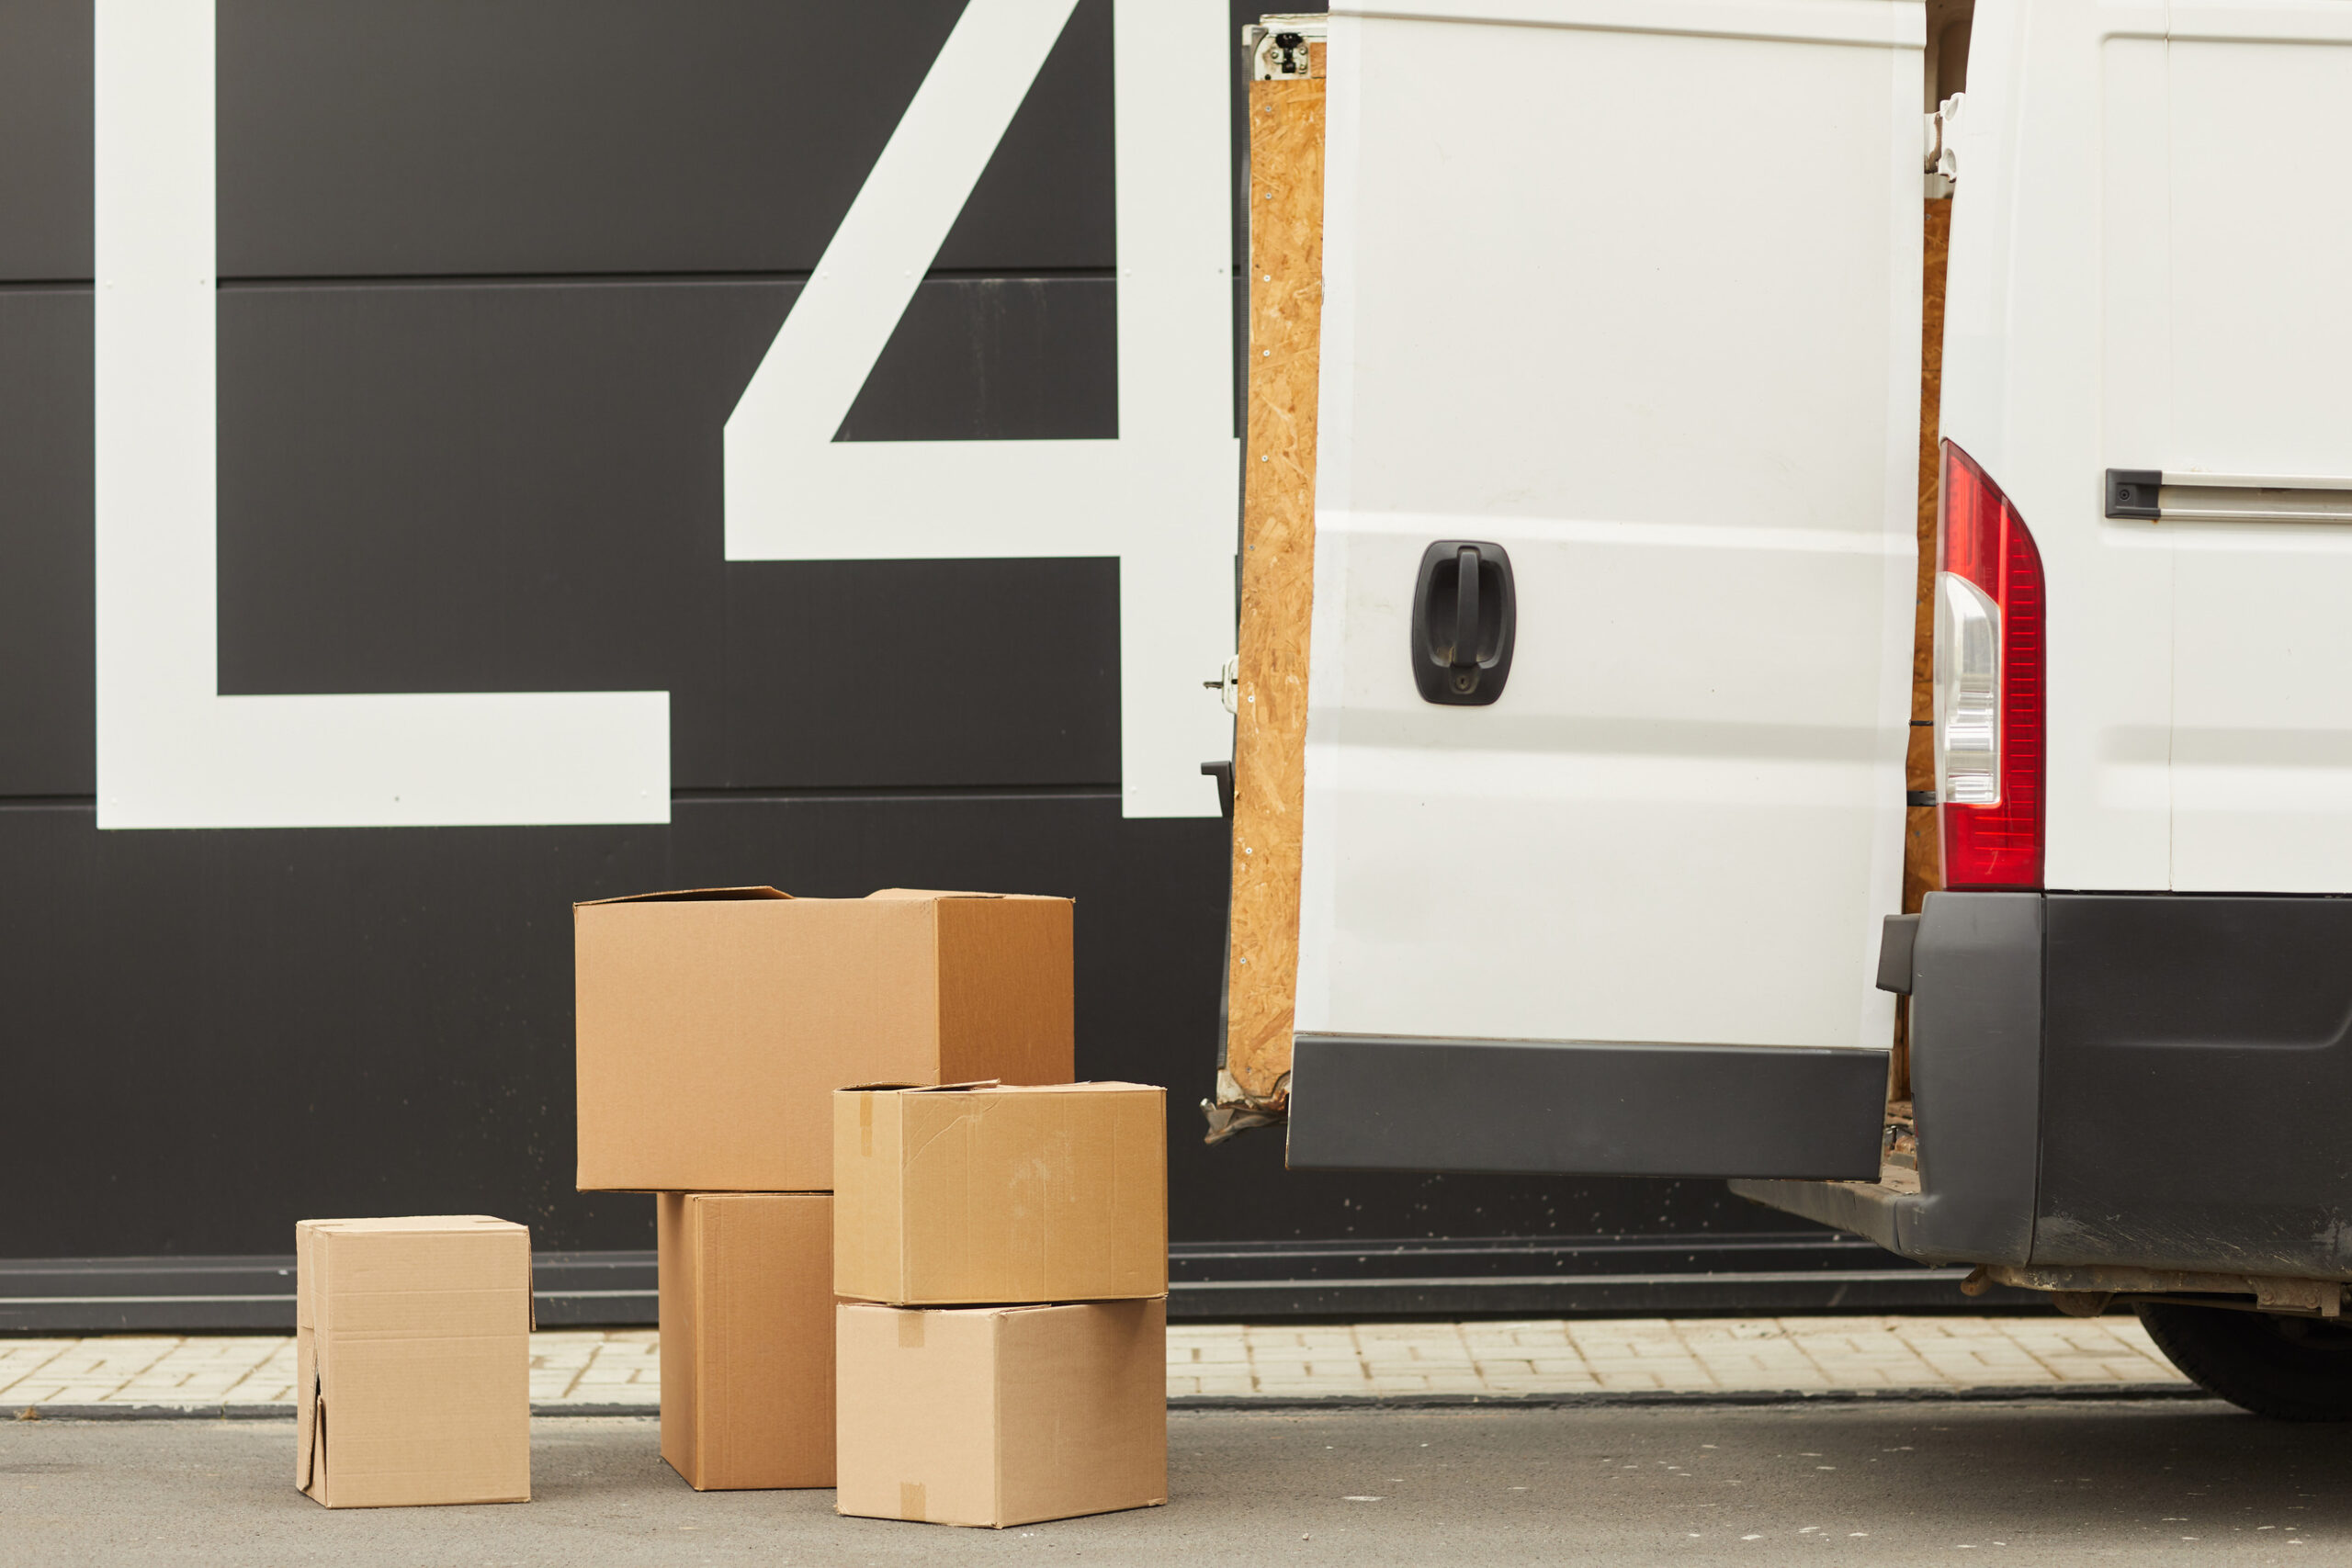 Delivery van unloading packages